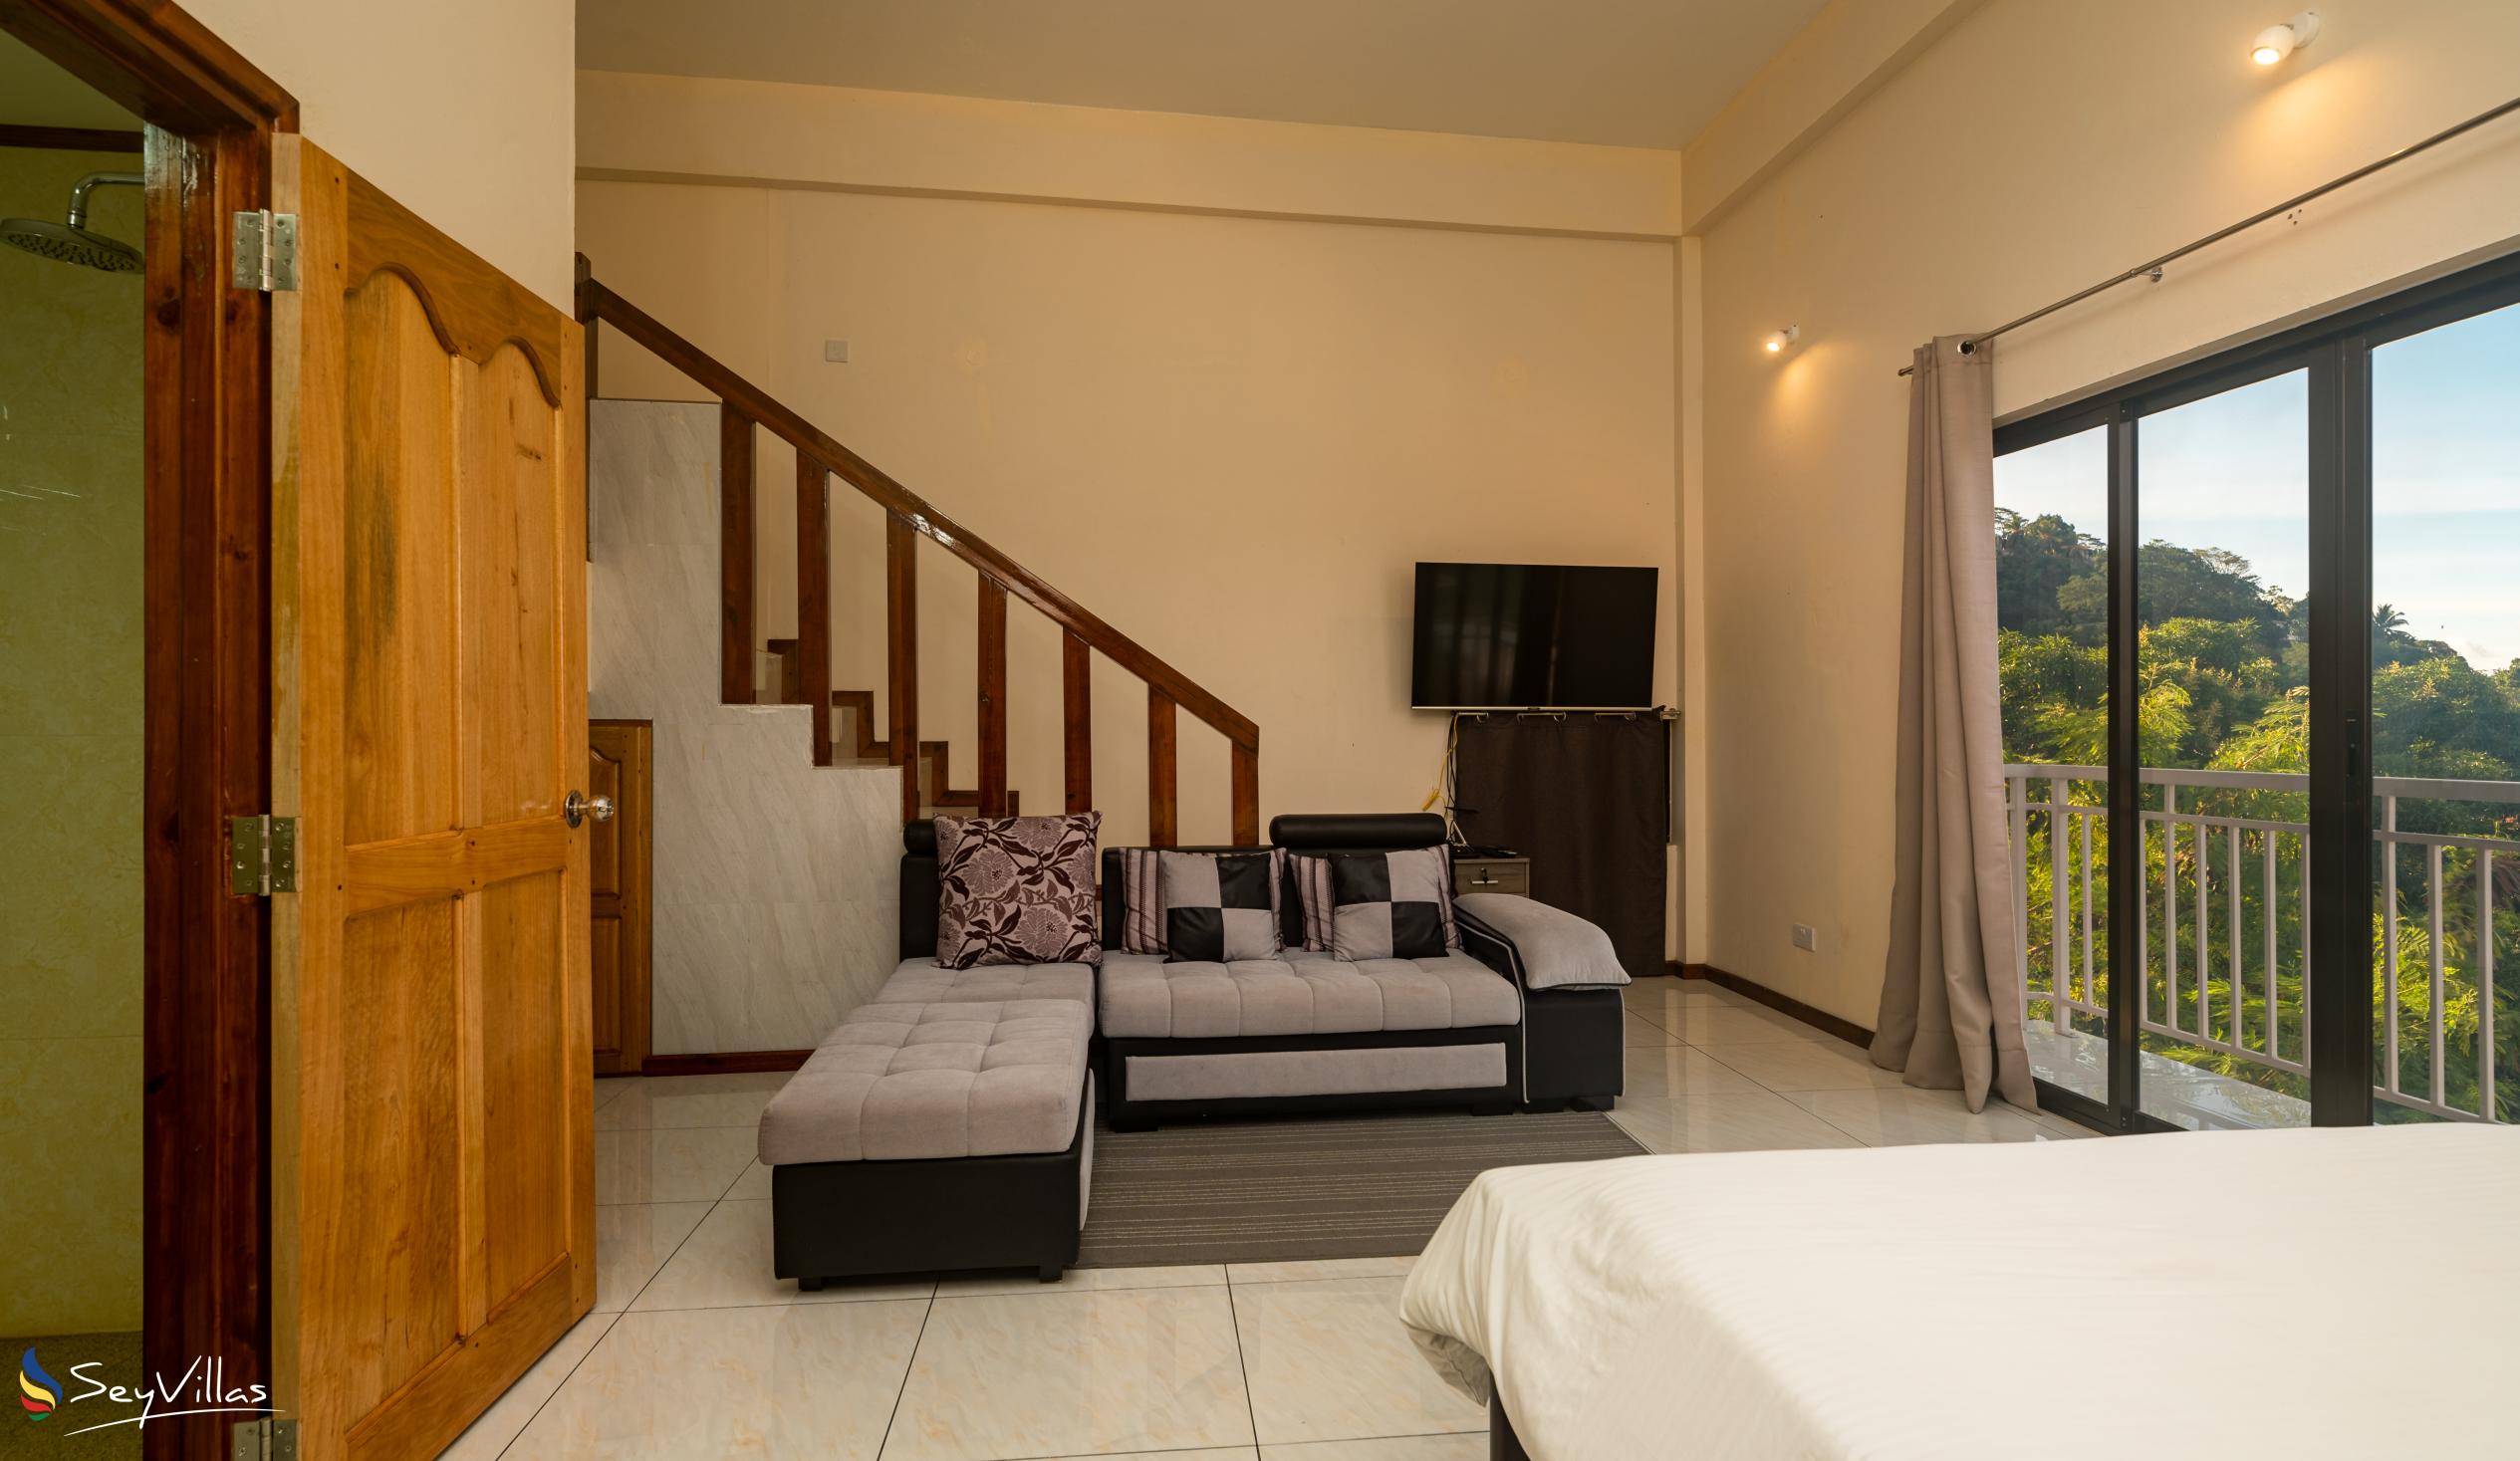 Foto 55: Maison L'Horizon - Appartamento con 1 camera Lalin - Mahé (Seychelles)